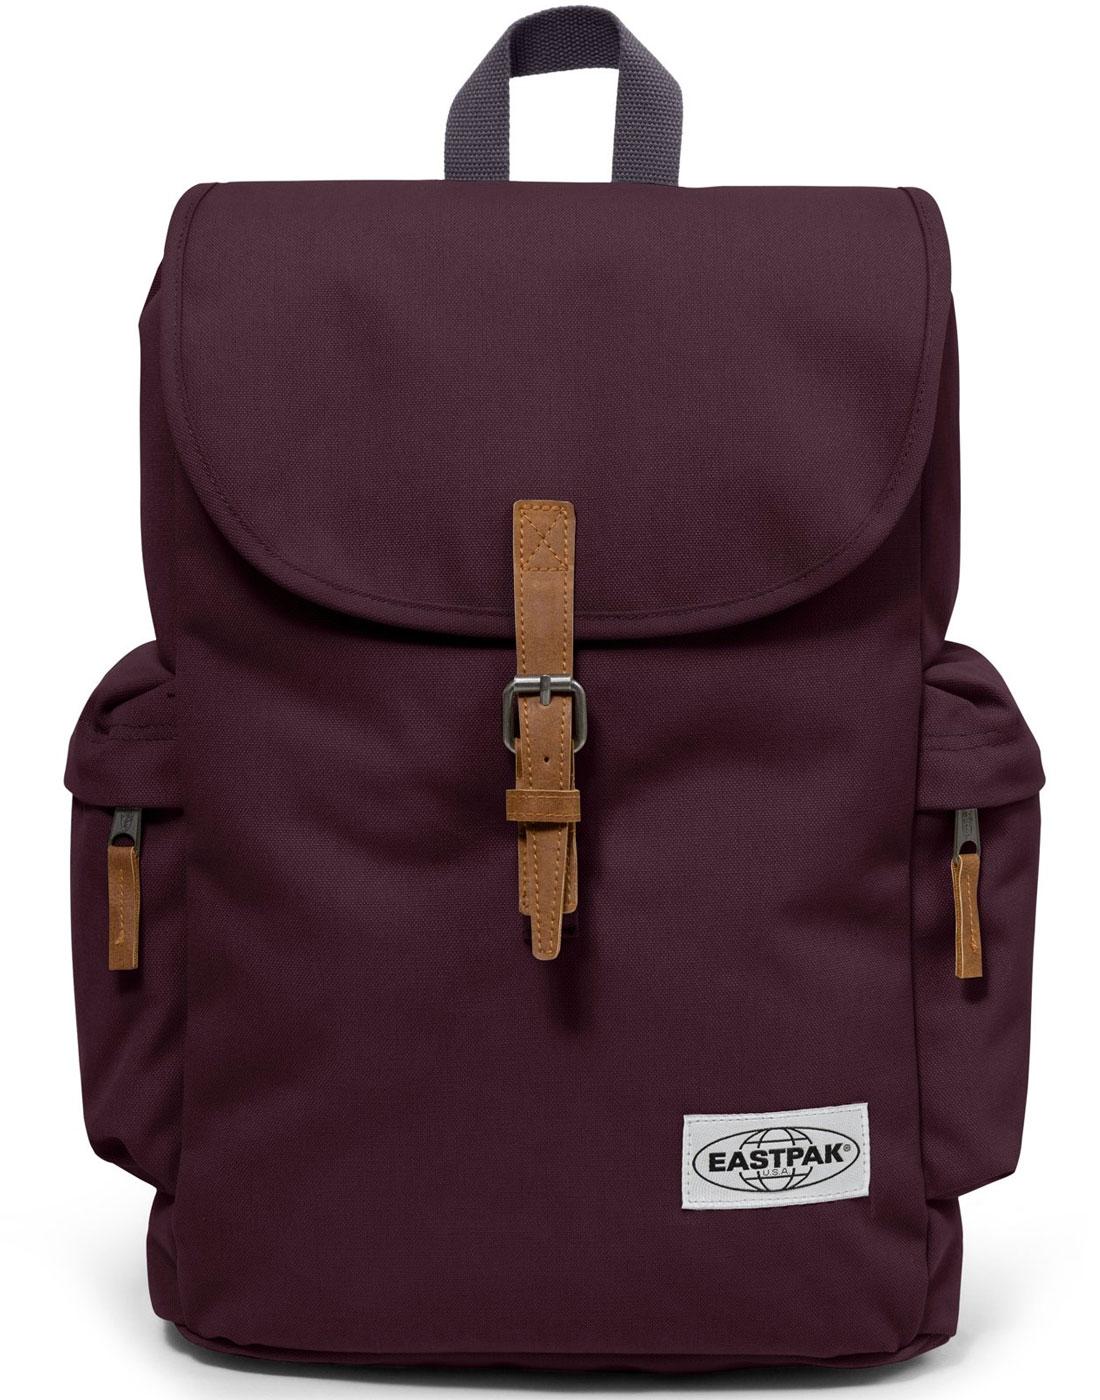 Austin EASTPAK Retro Laptop Backpack OPGRADE WINE